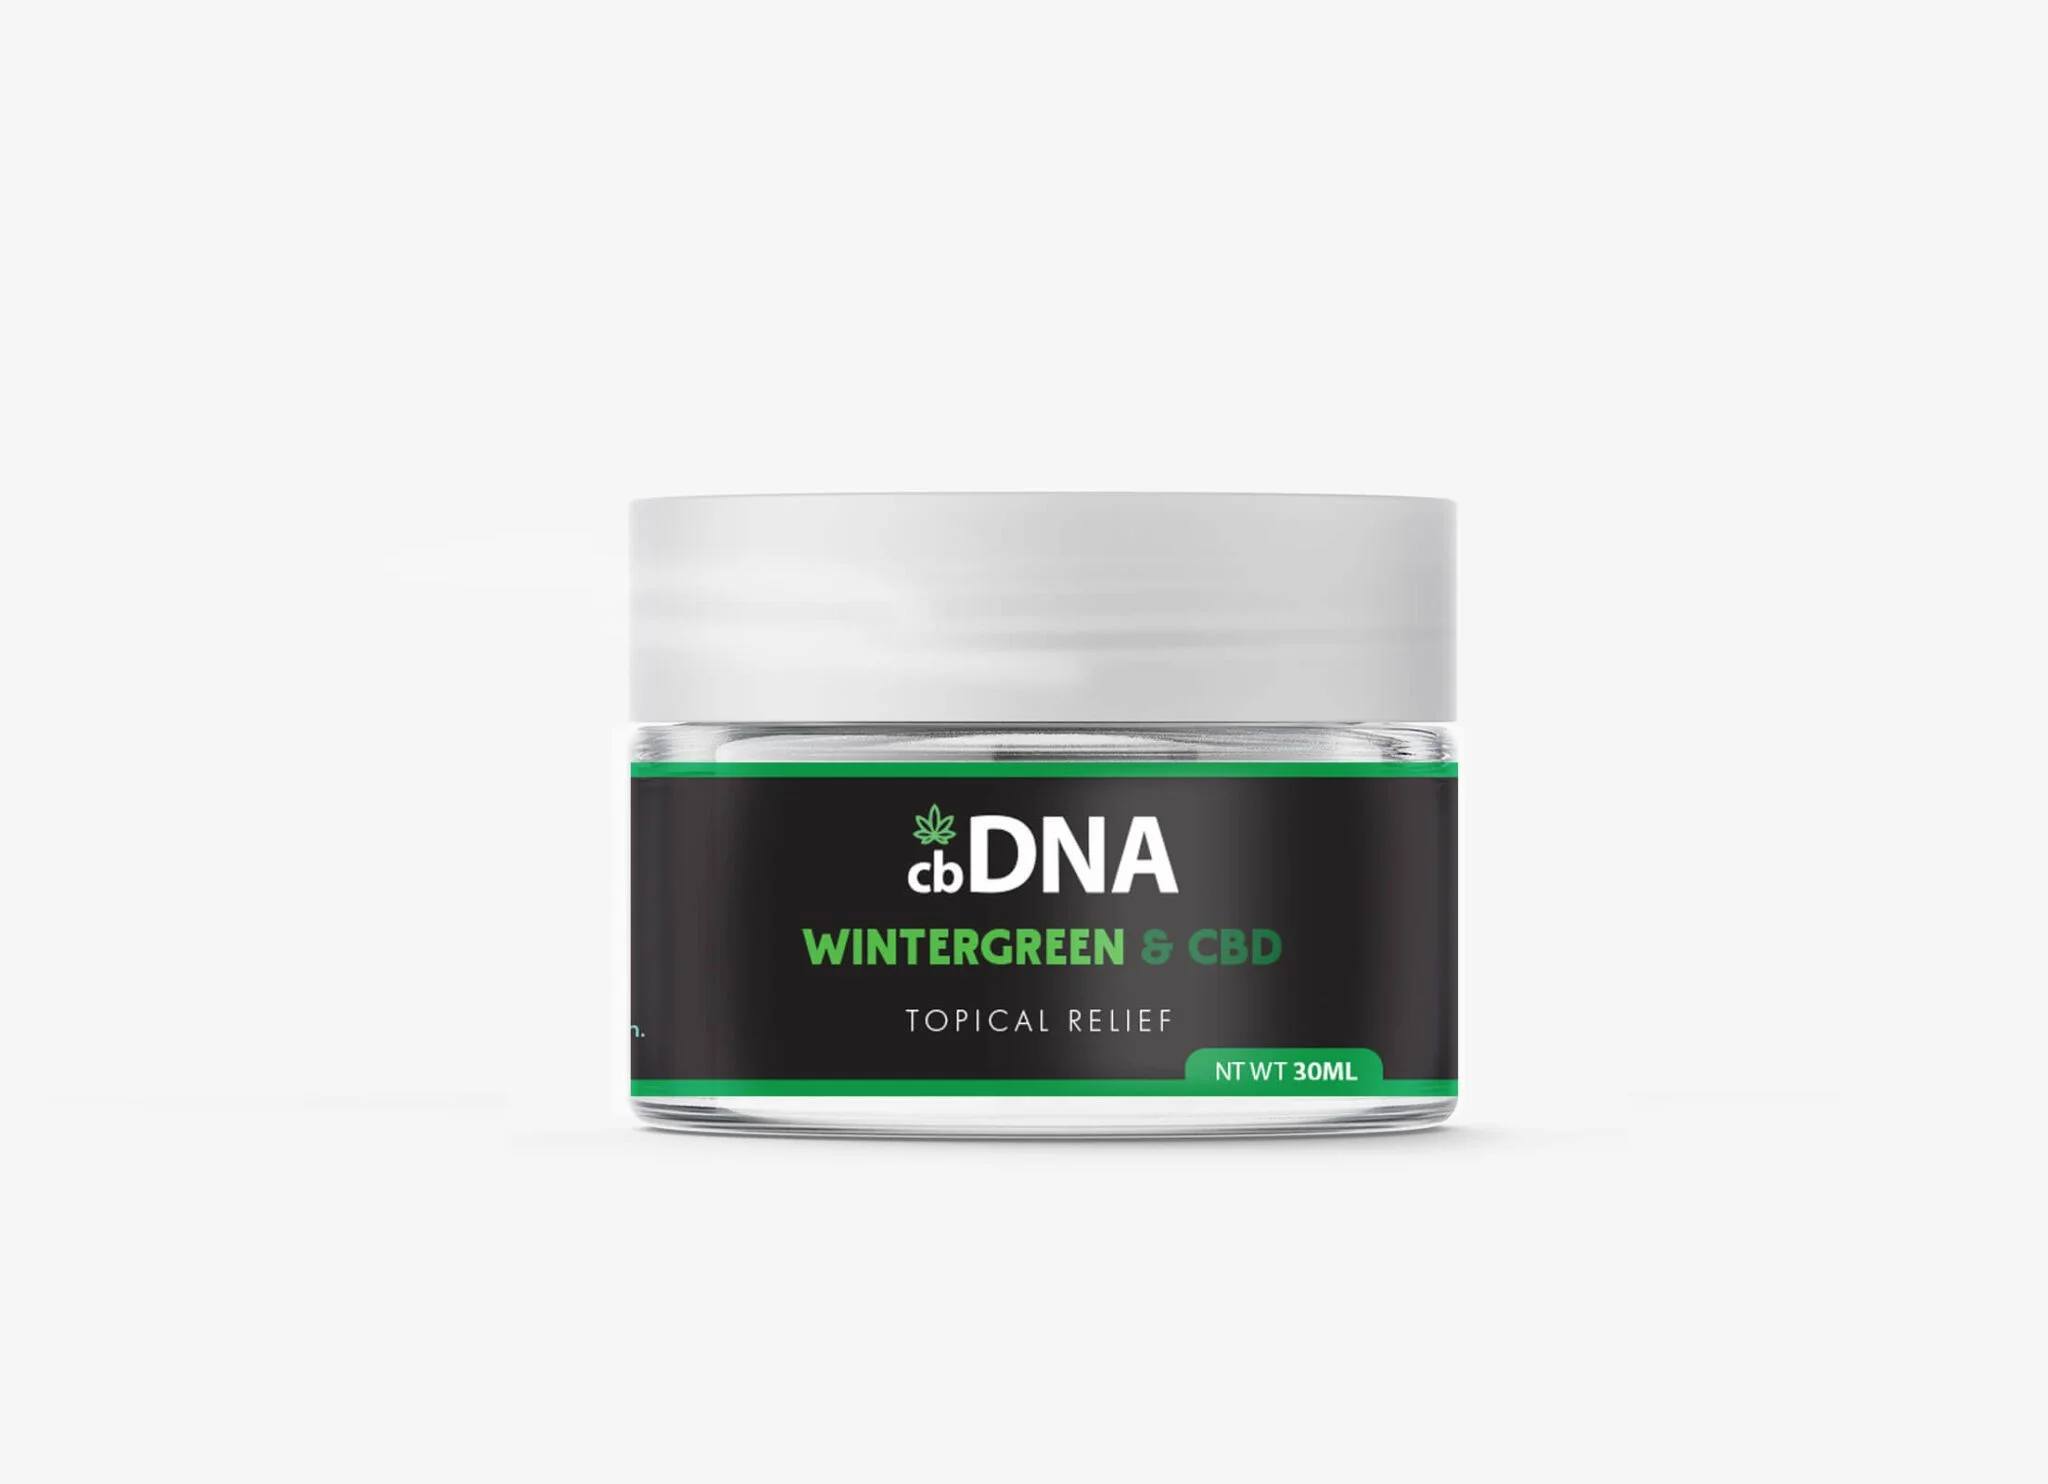 cbDNA - Wintergreen